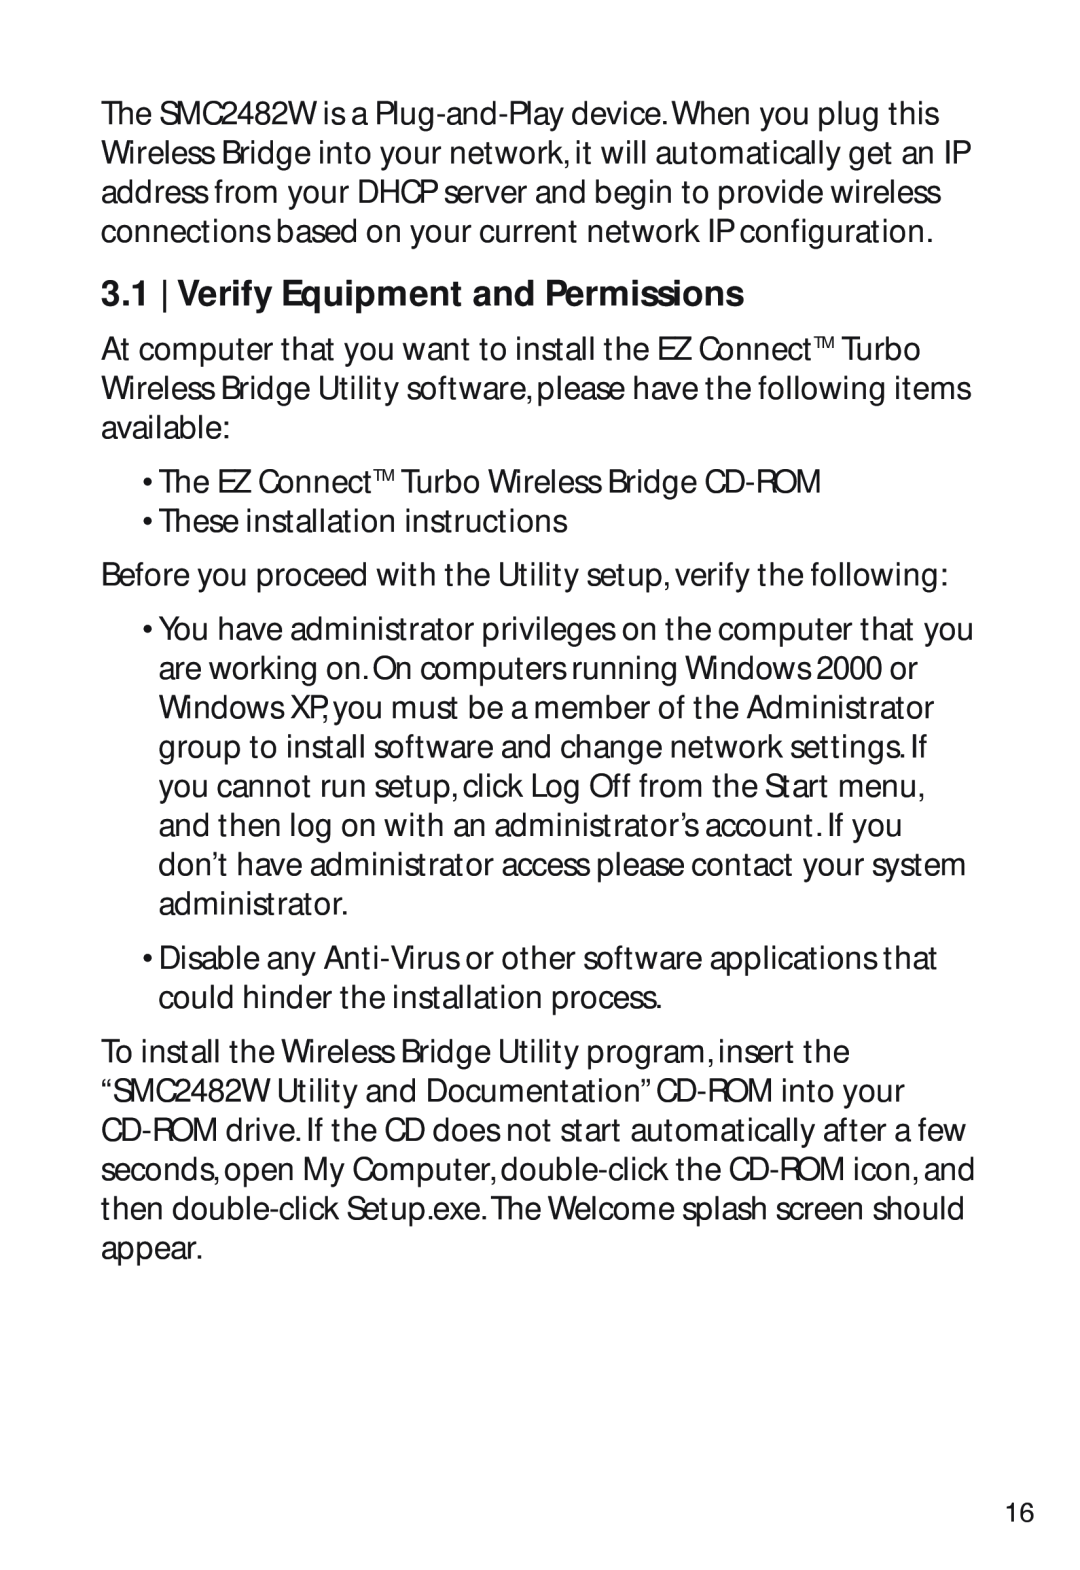 SMC Networks SMC2482W manual Verify Equipment and Permissions 